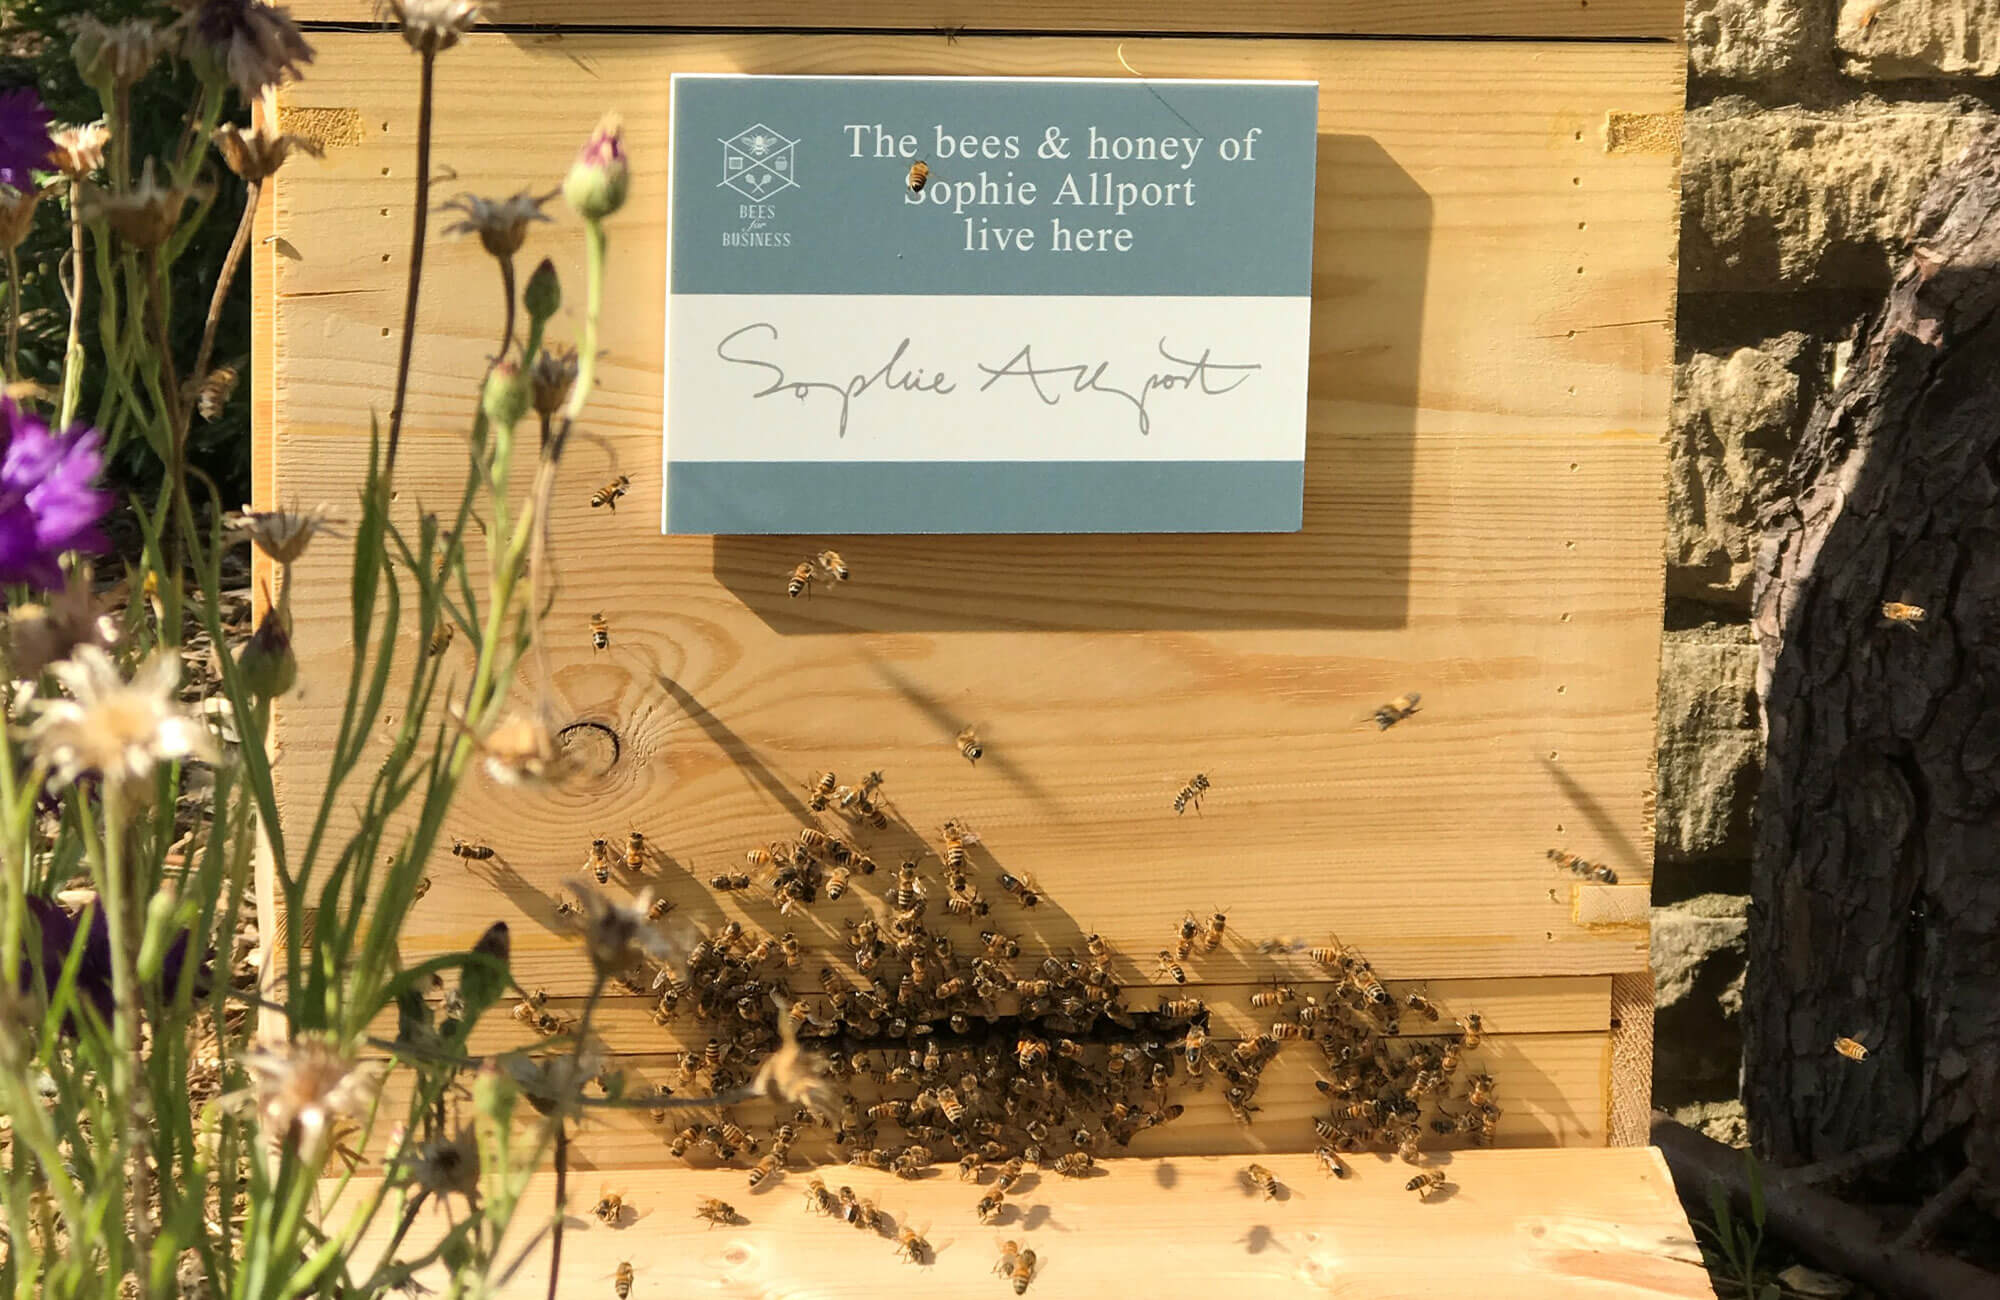 10 Bee-autiful Bee Facts